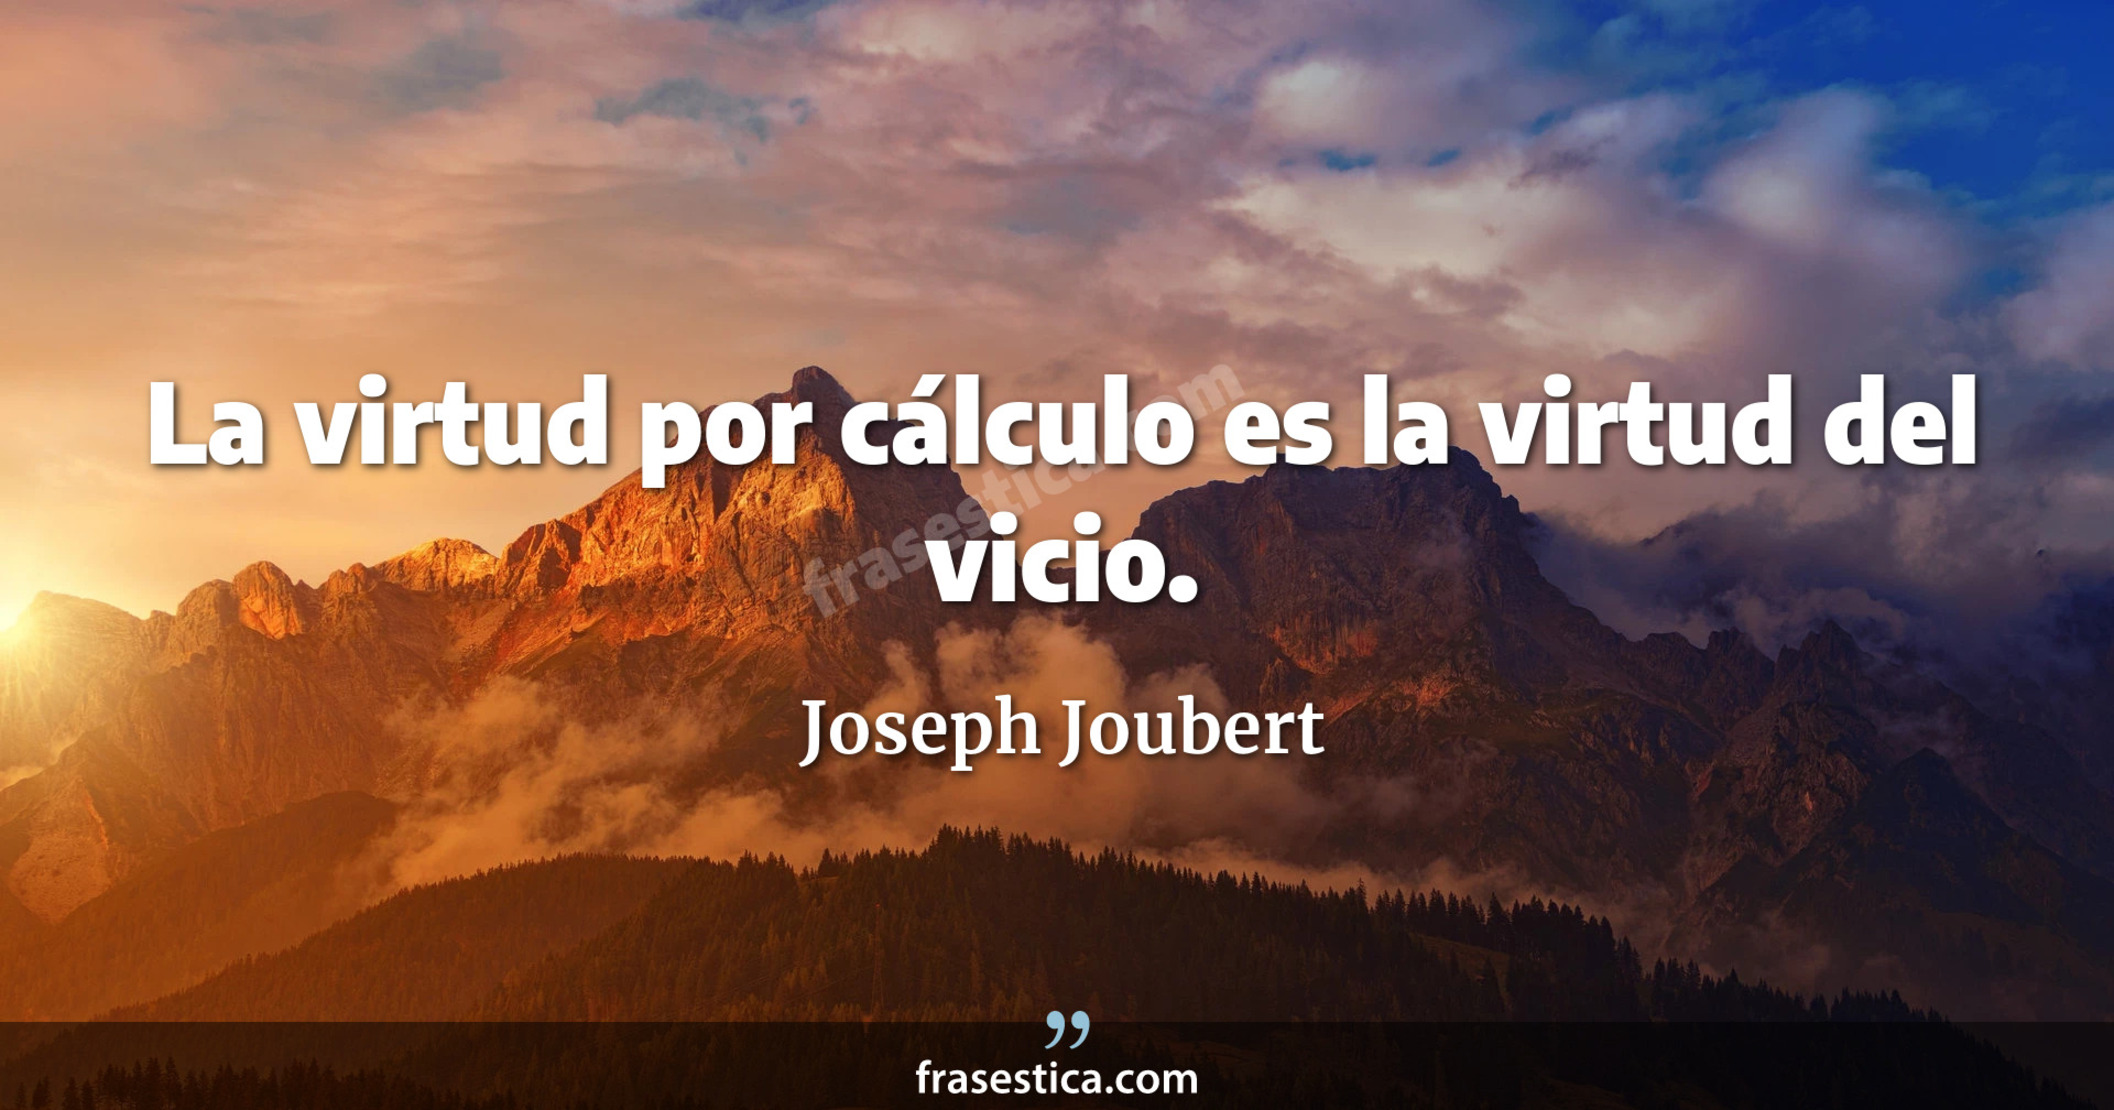 La virtud por cálculo es la virtud del vicio. - Joseph Joubert